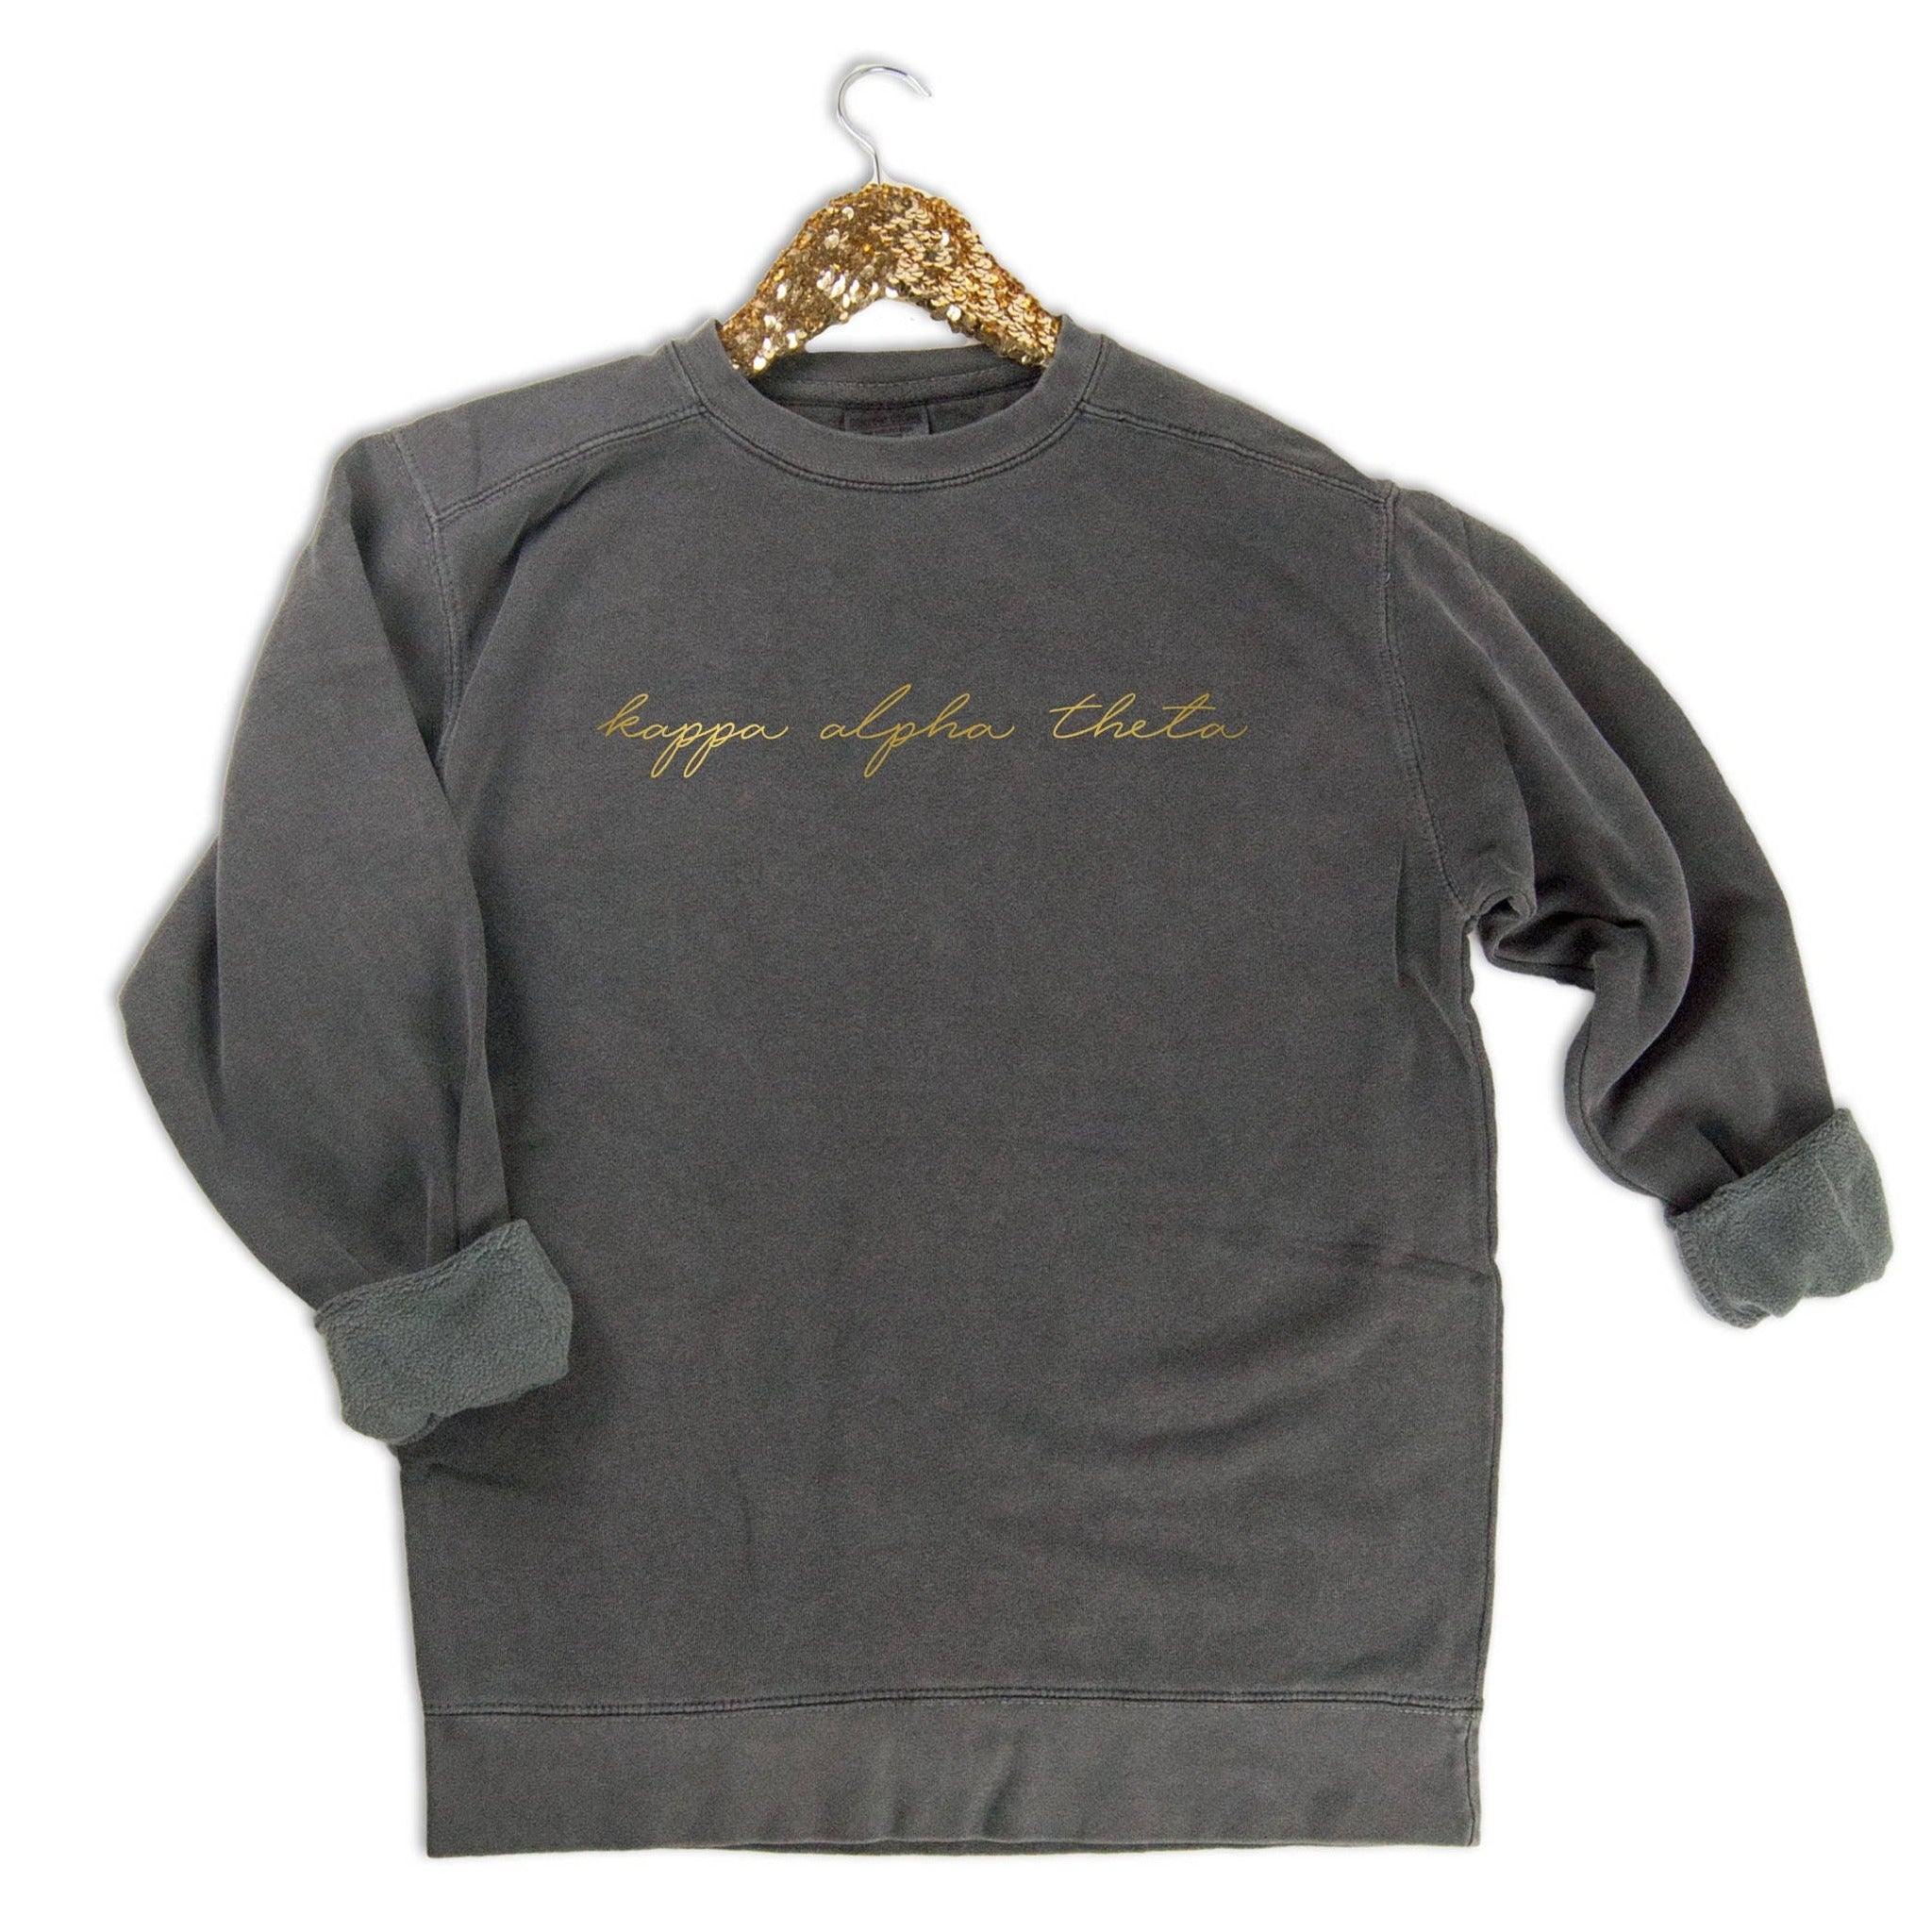 Kappa Alpha Theta Gold Script Letters Sweatshirt - Go Greek Chic